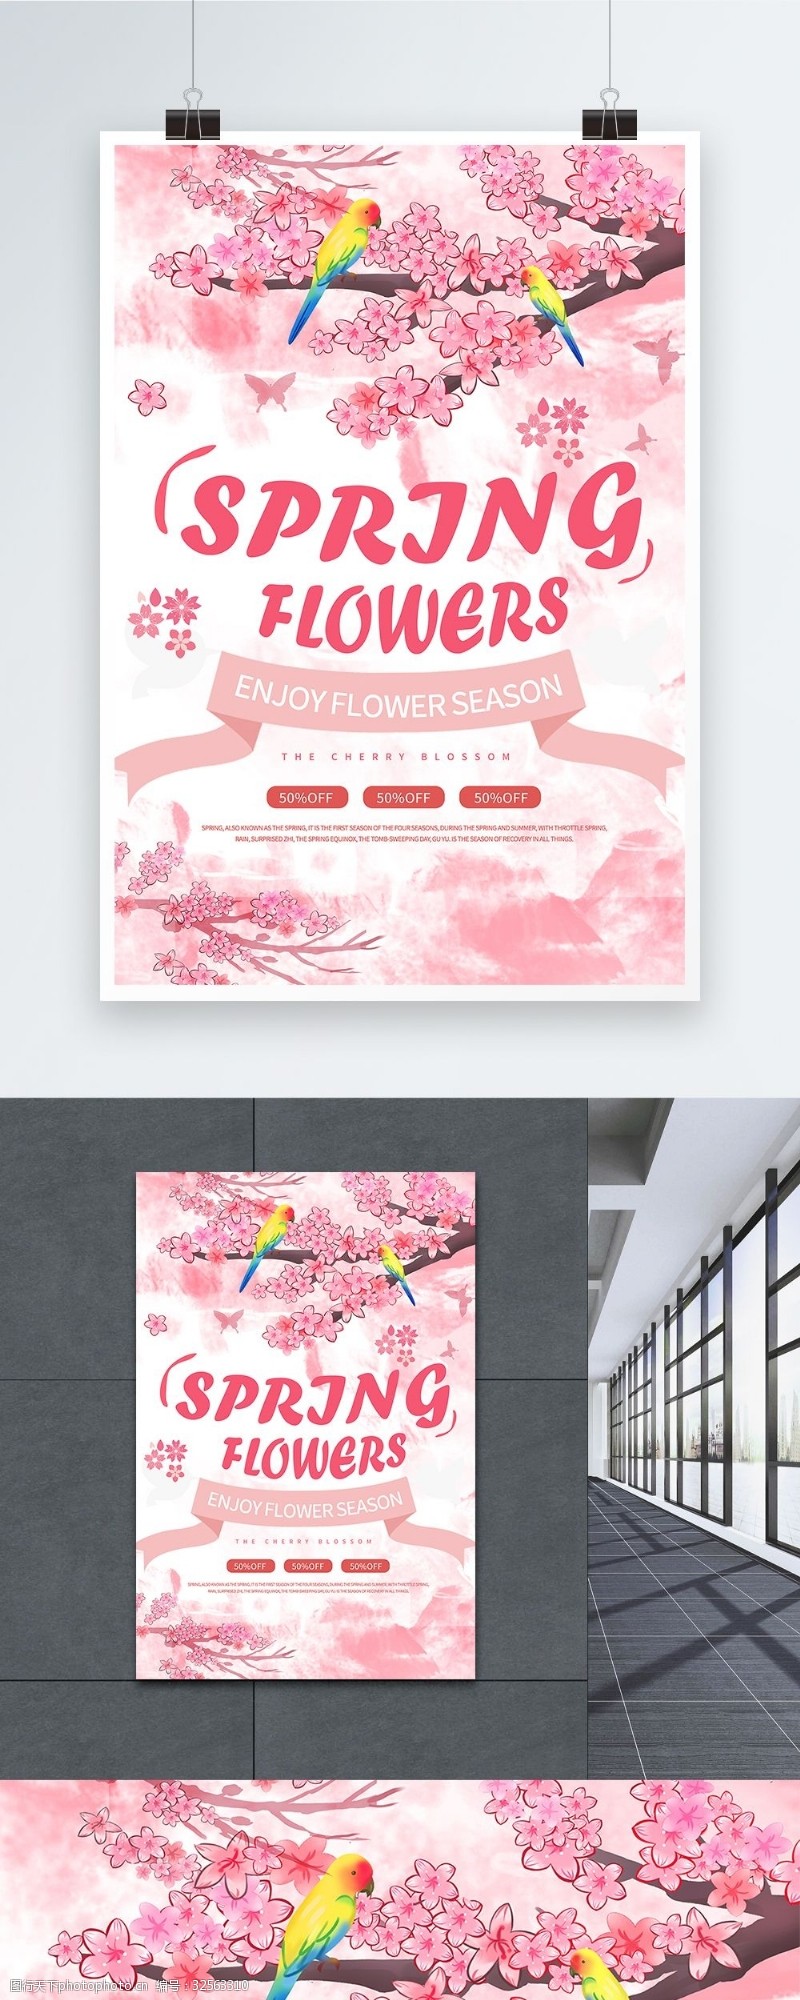 flowers粉色唯美春季赏花纯英文海报